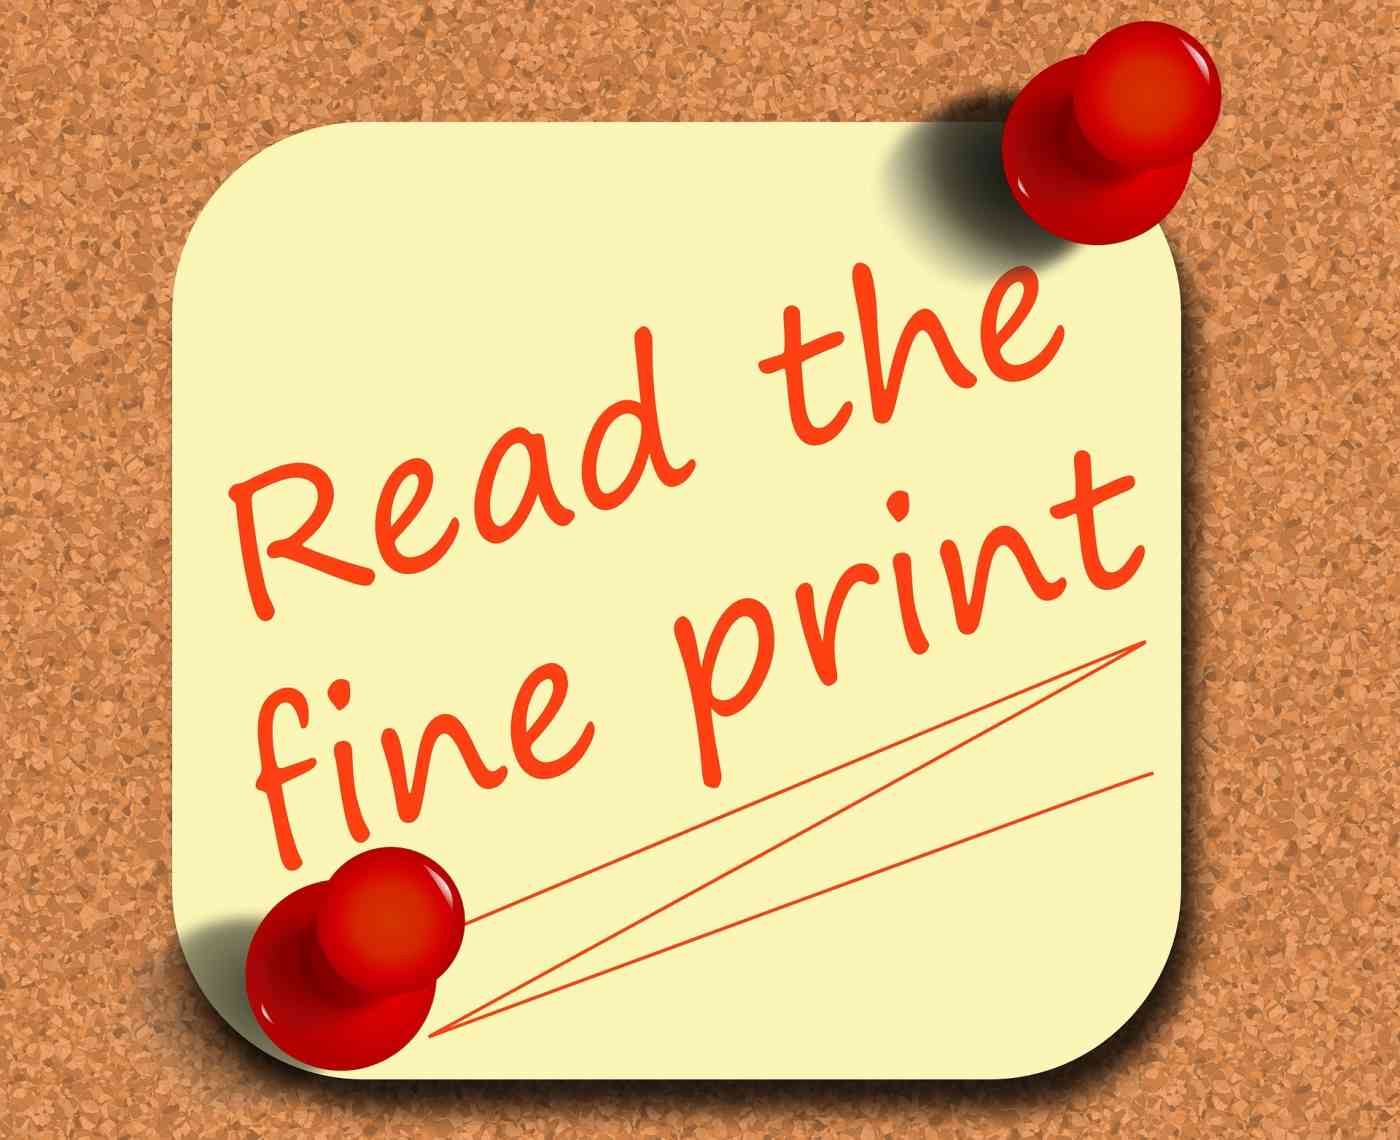 MVNOS Great Offers Read Fine Print